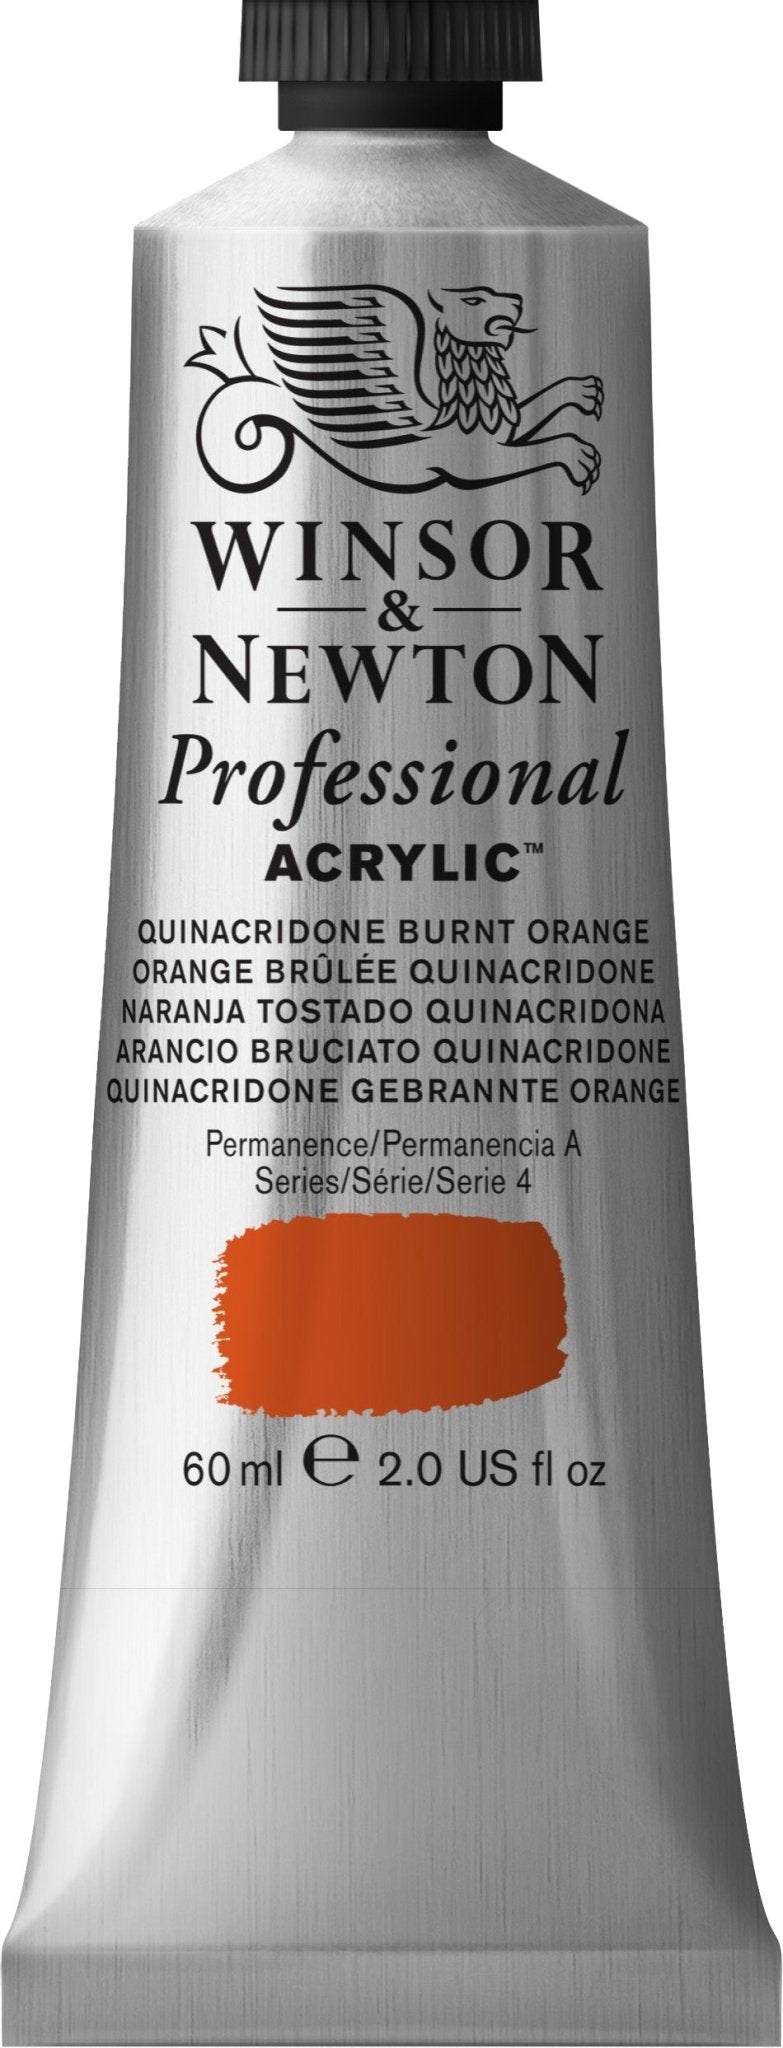 W & N Professional Acrylic 60ml Quinacridone Burnt Orange - theartshop.com.au